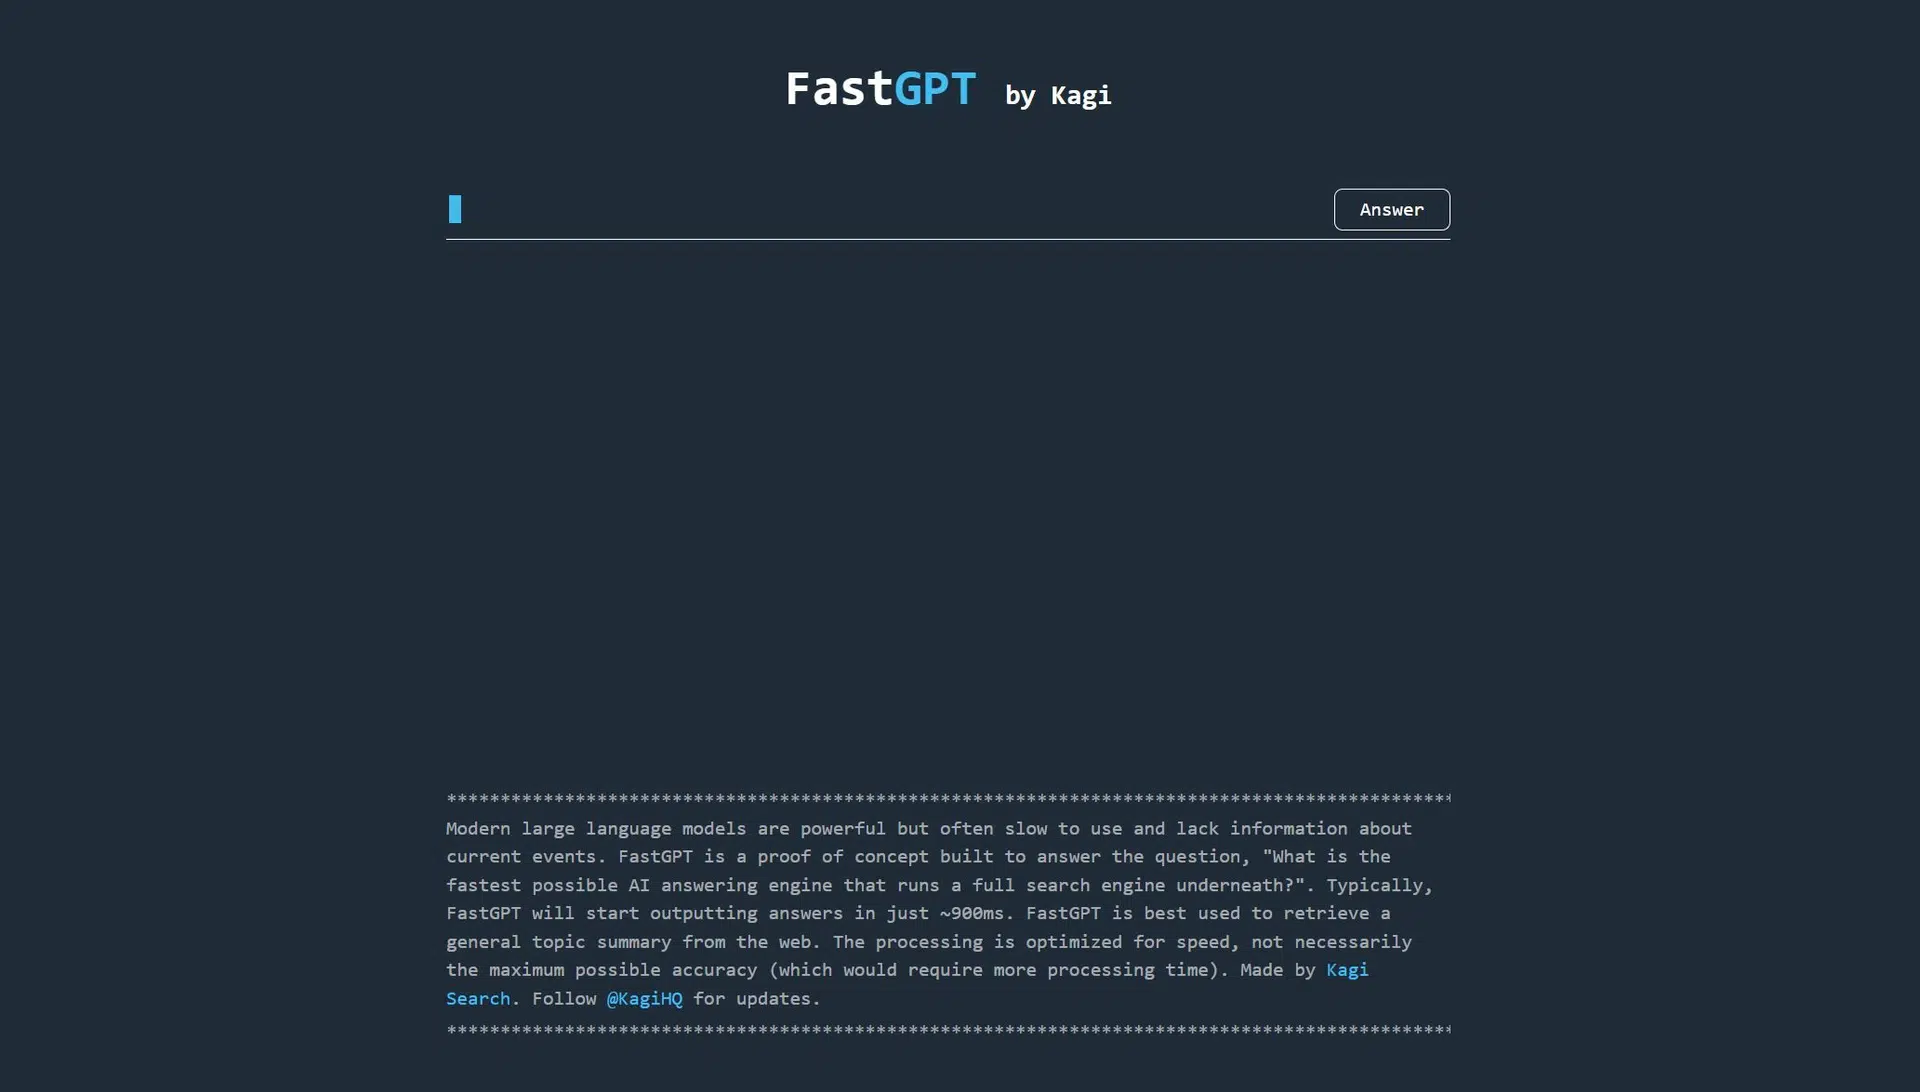 FastGPTwebsite picture